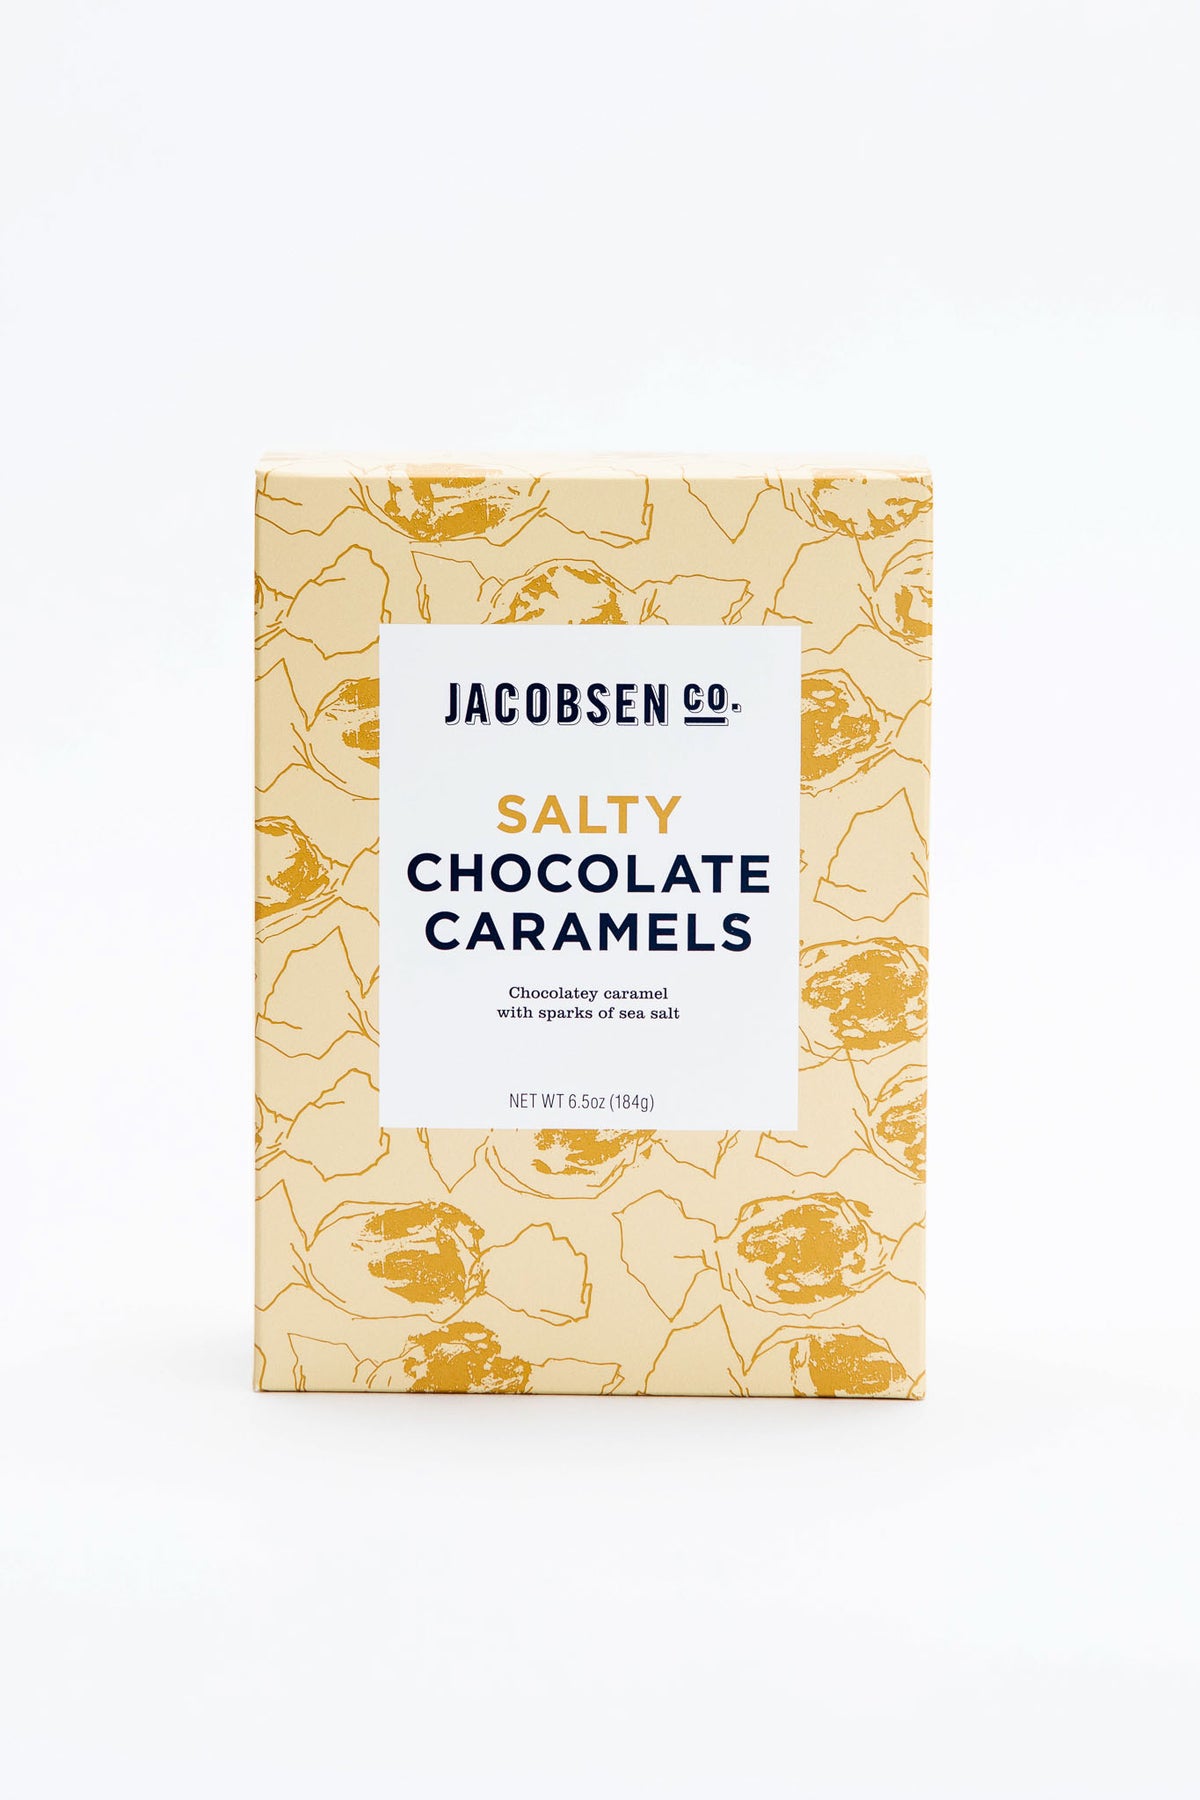 Jacobsen Salt Co. Salty Chocolate Caramels